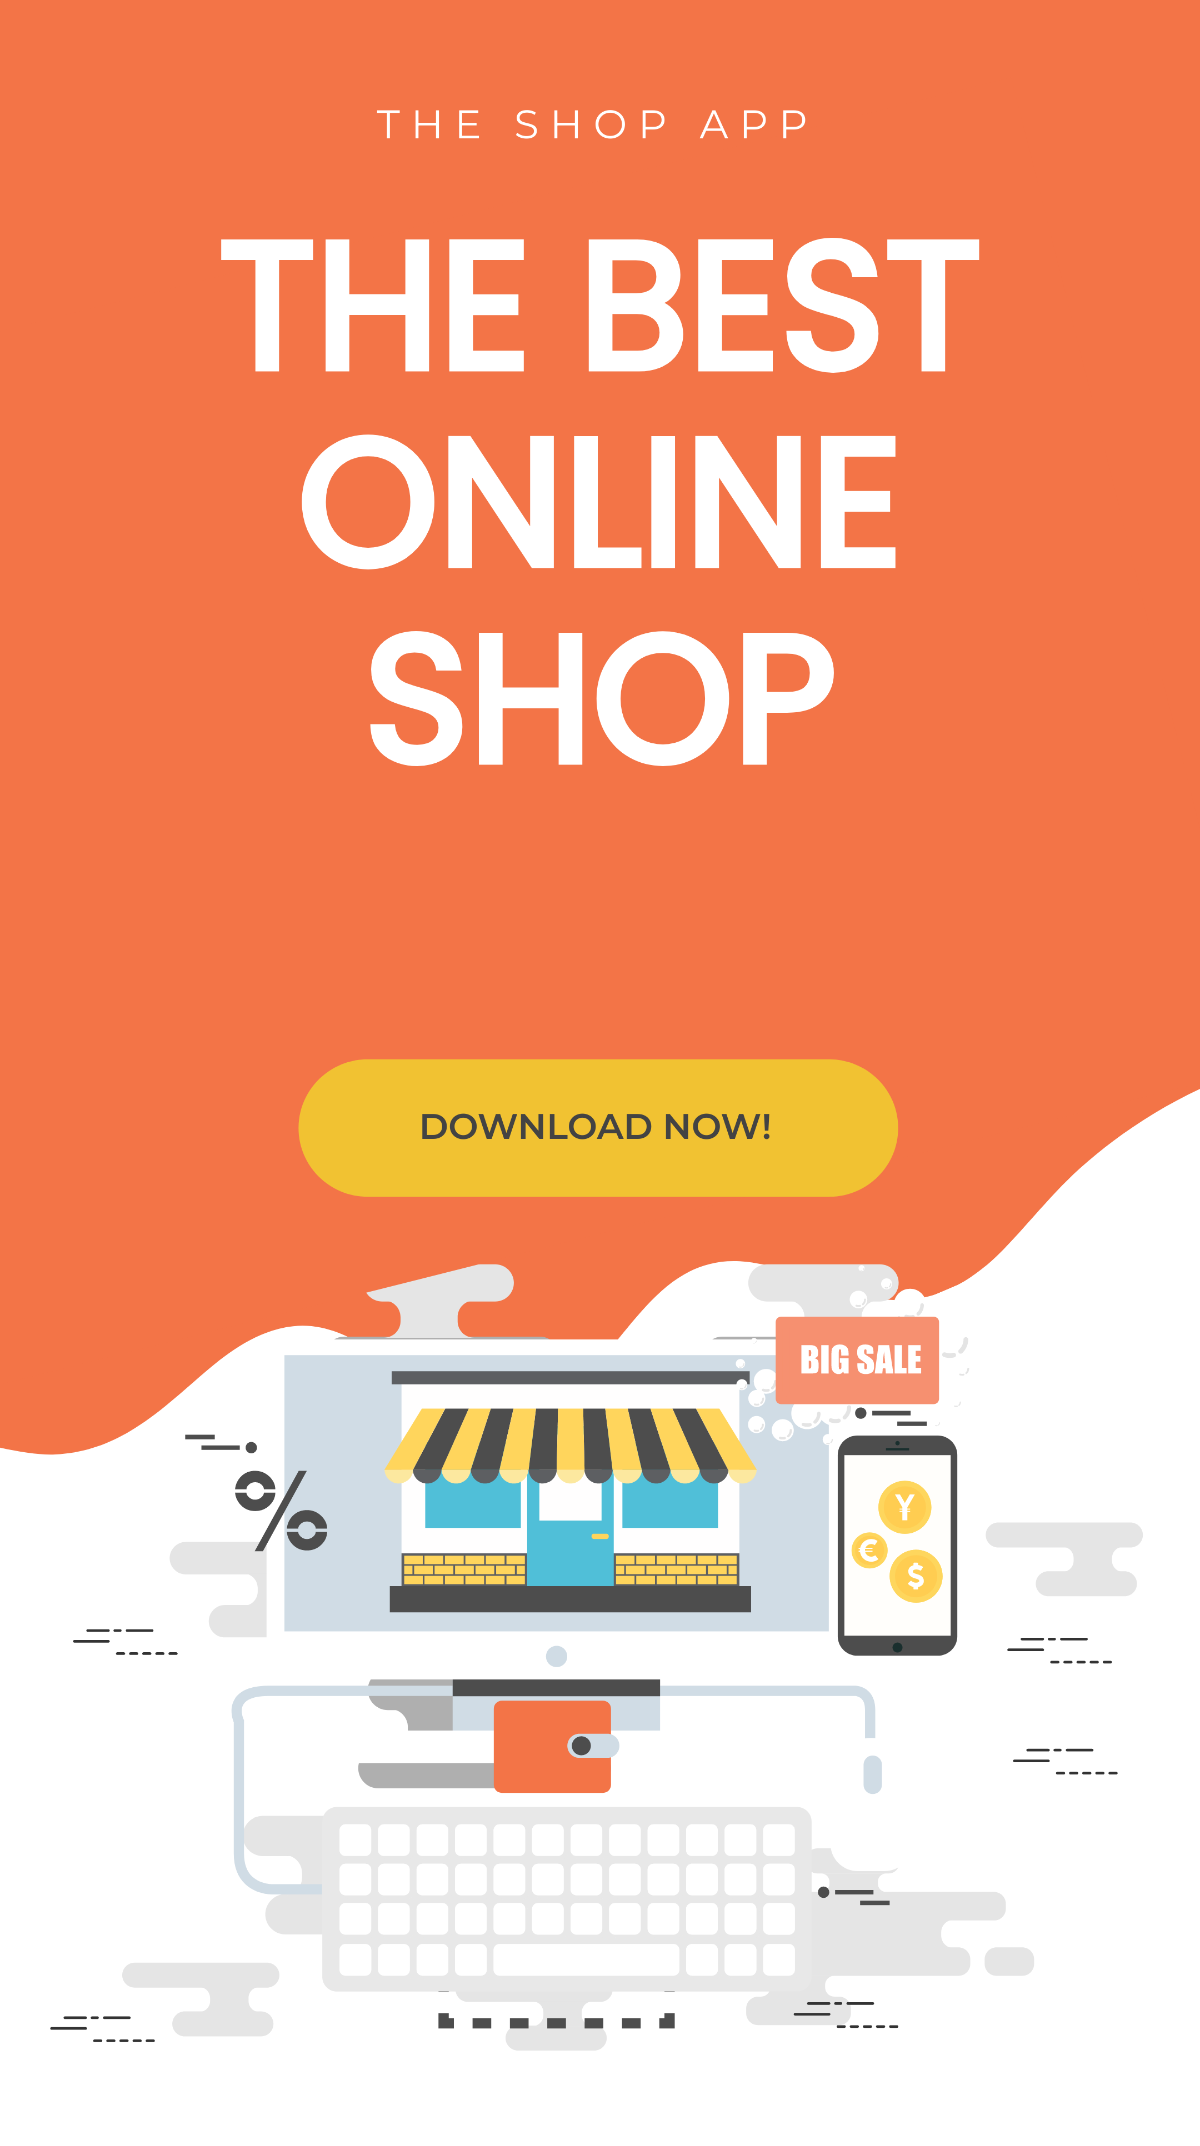 Online Shop App Promotion Whatsapp Image Post